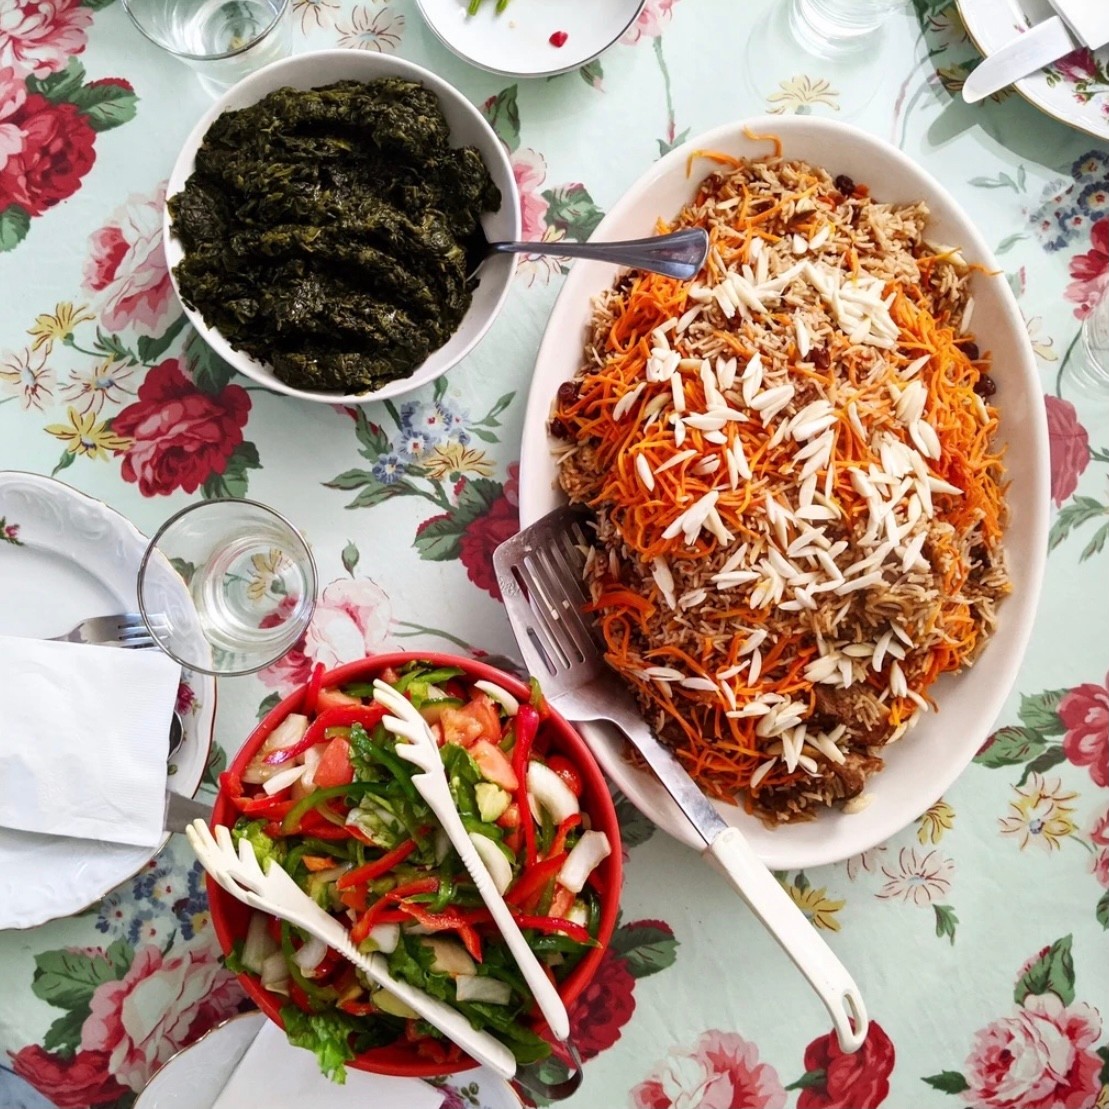 Image of Qabuli Pilau/Spiced Rice with Carrots, Raisins and Lamb